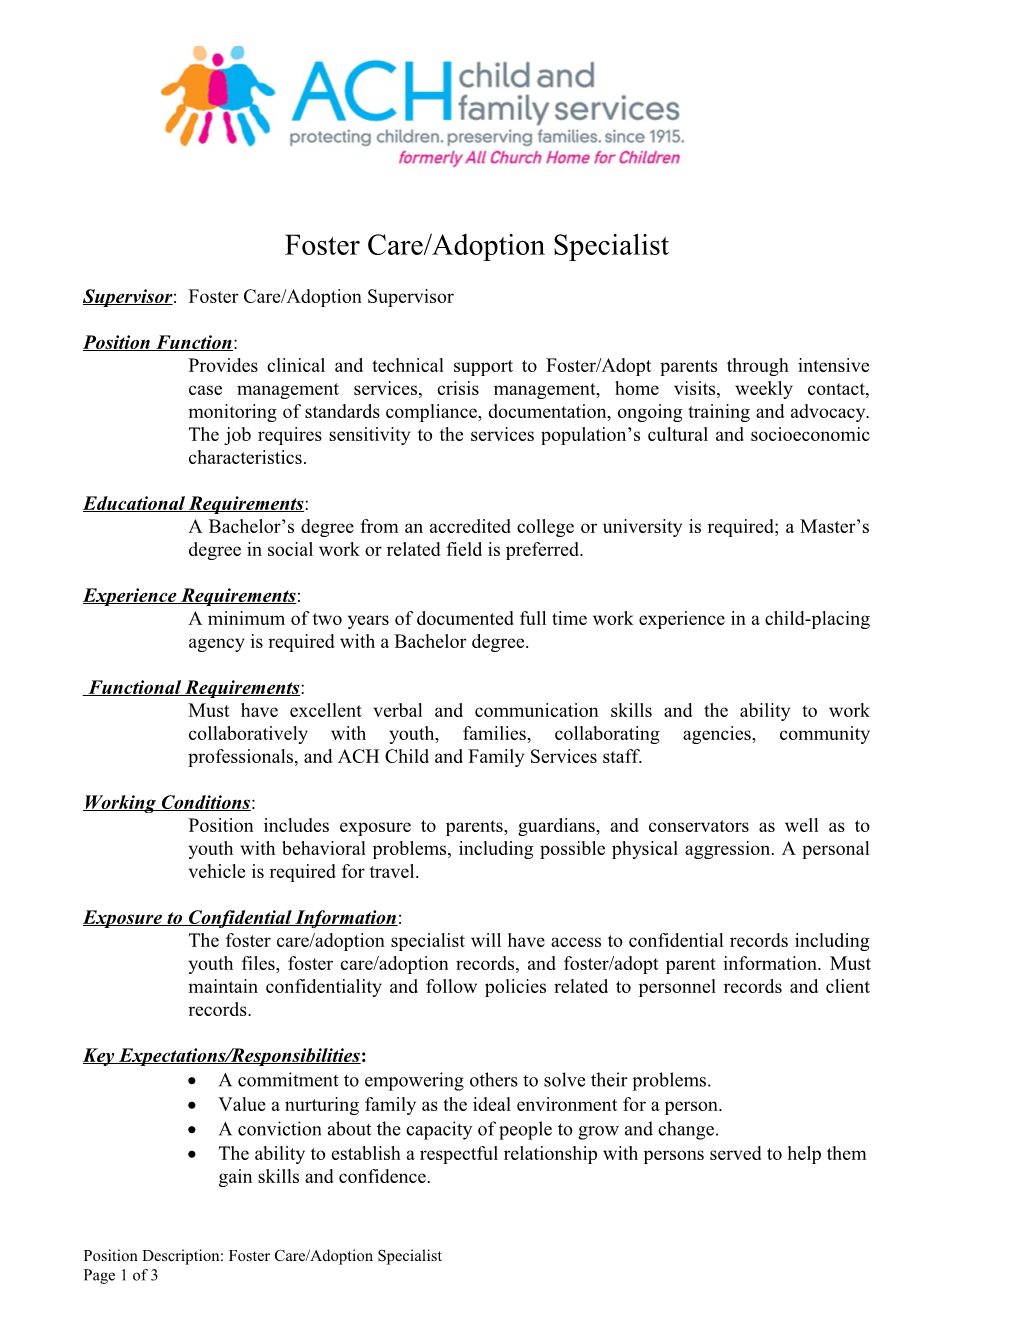 Job Description for Foster Care Case Manager s1